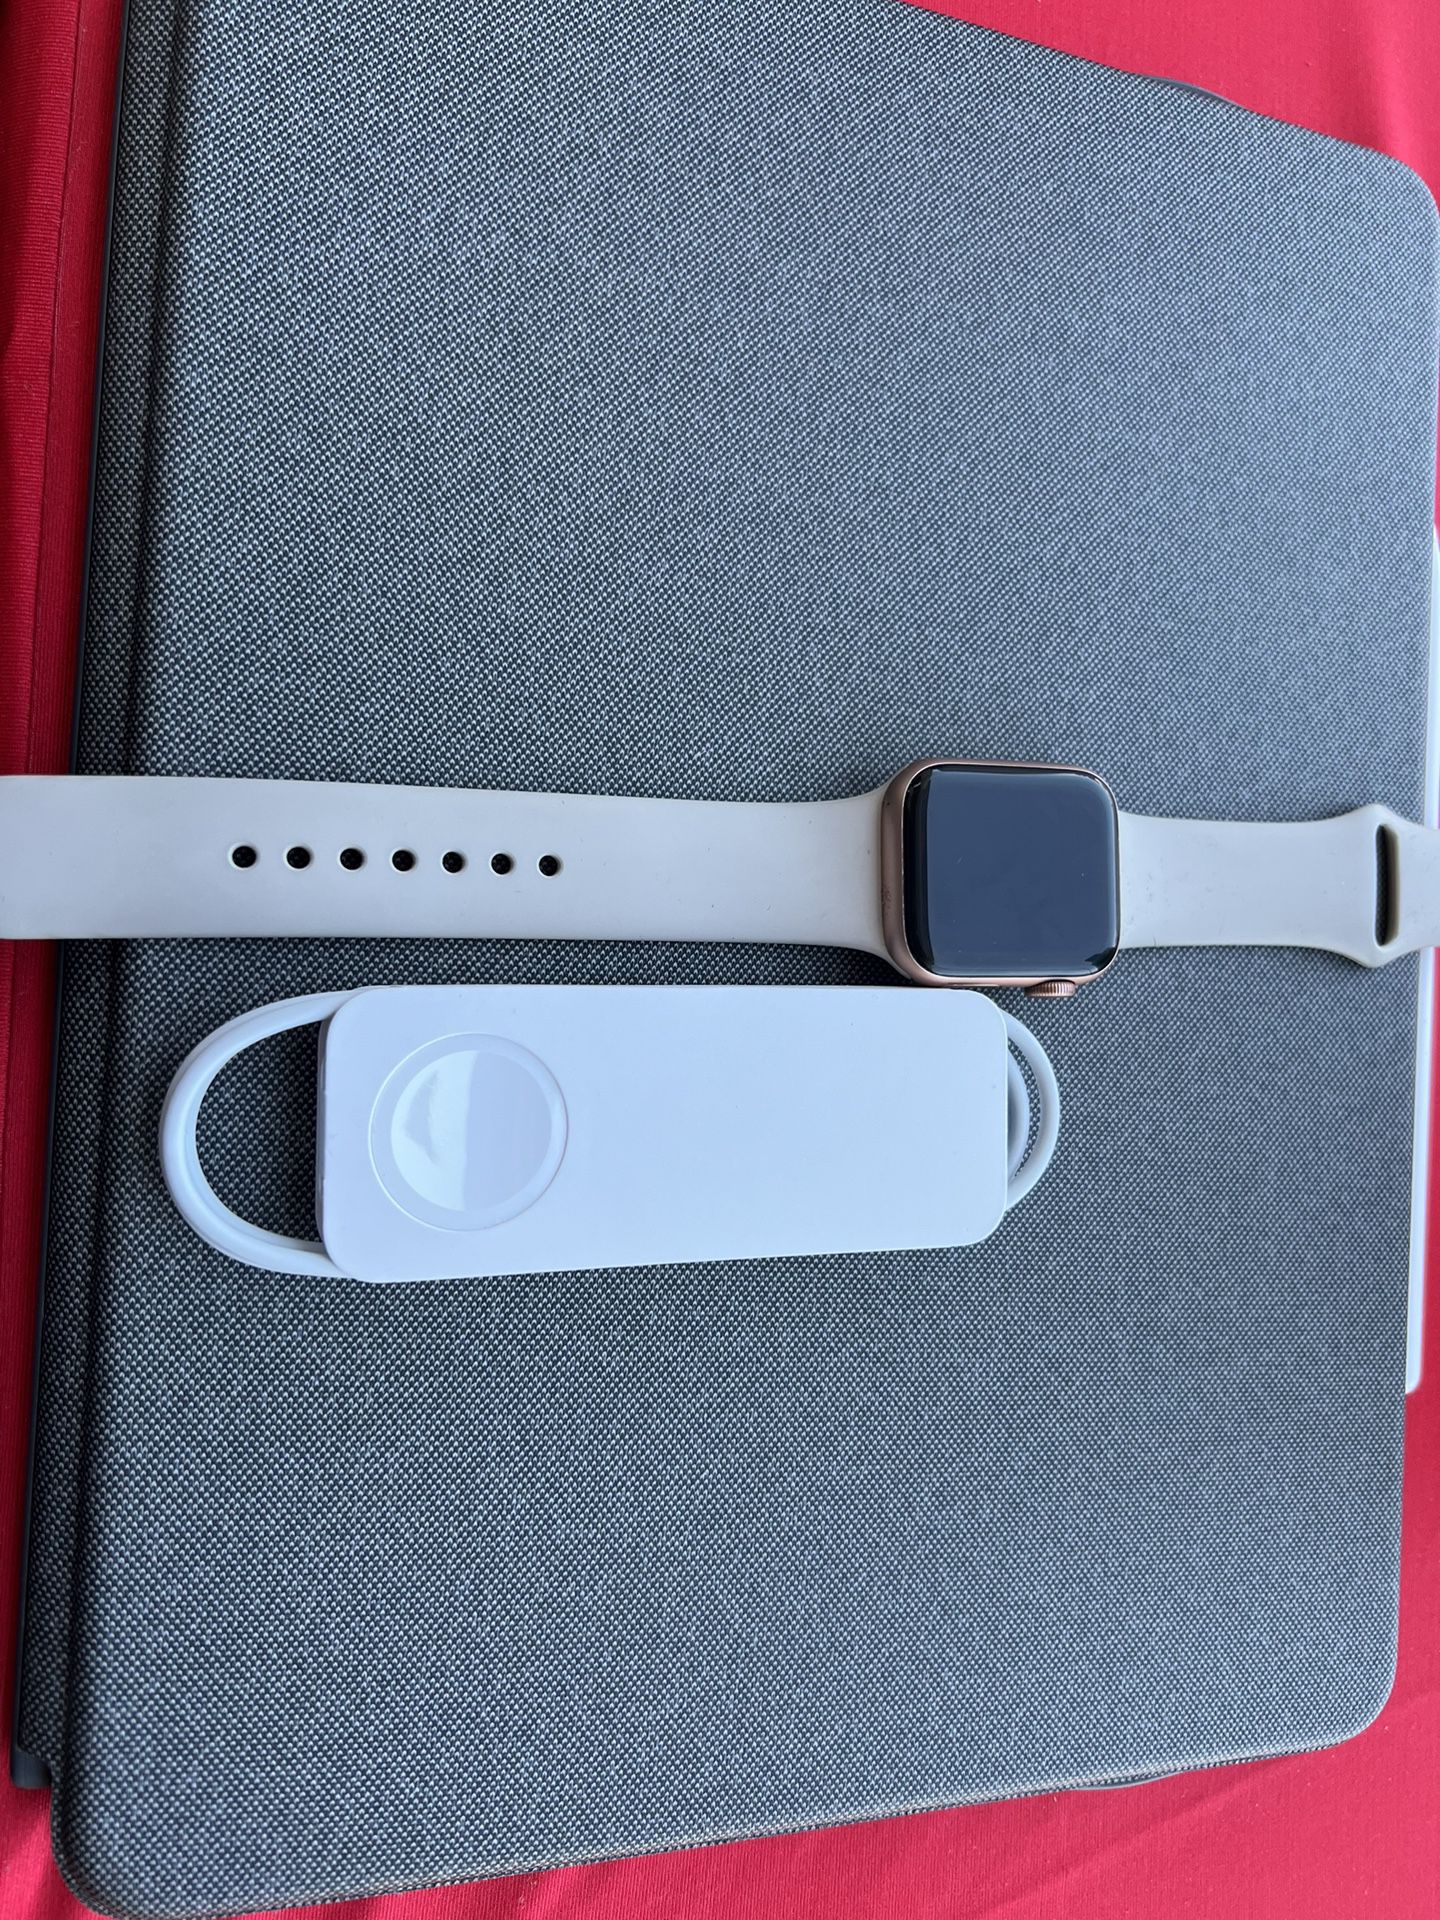 Apple Watch SE ( Cellular) 